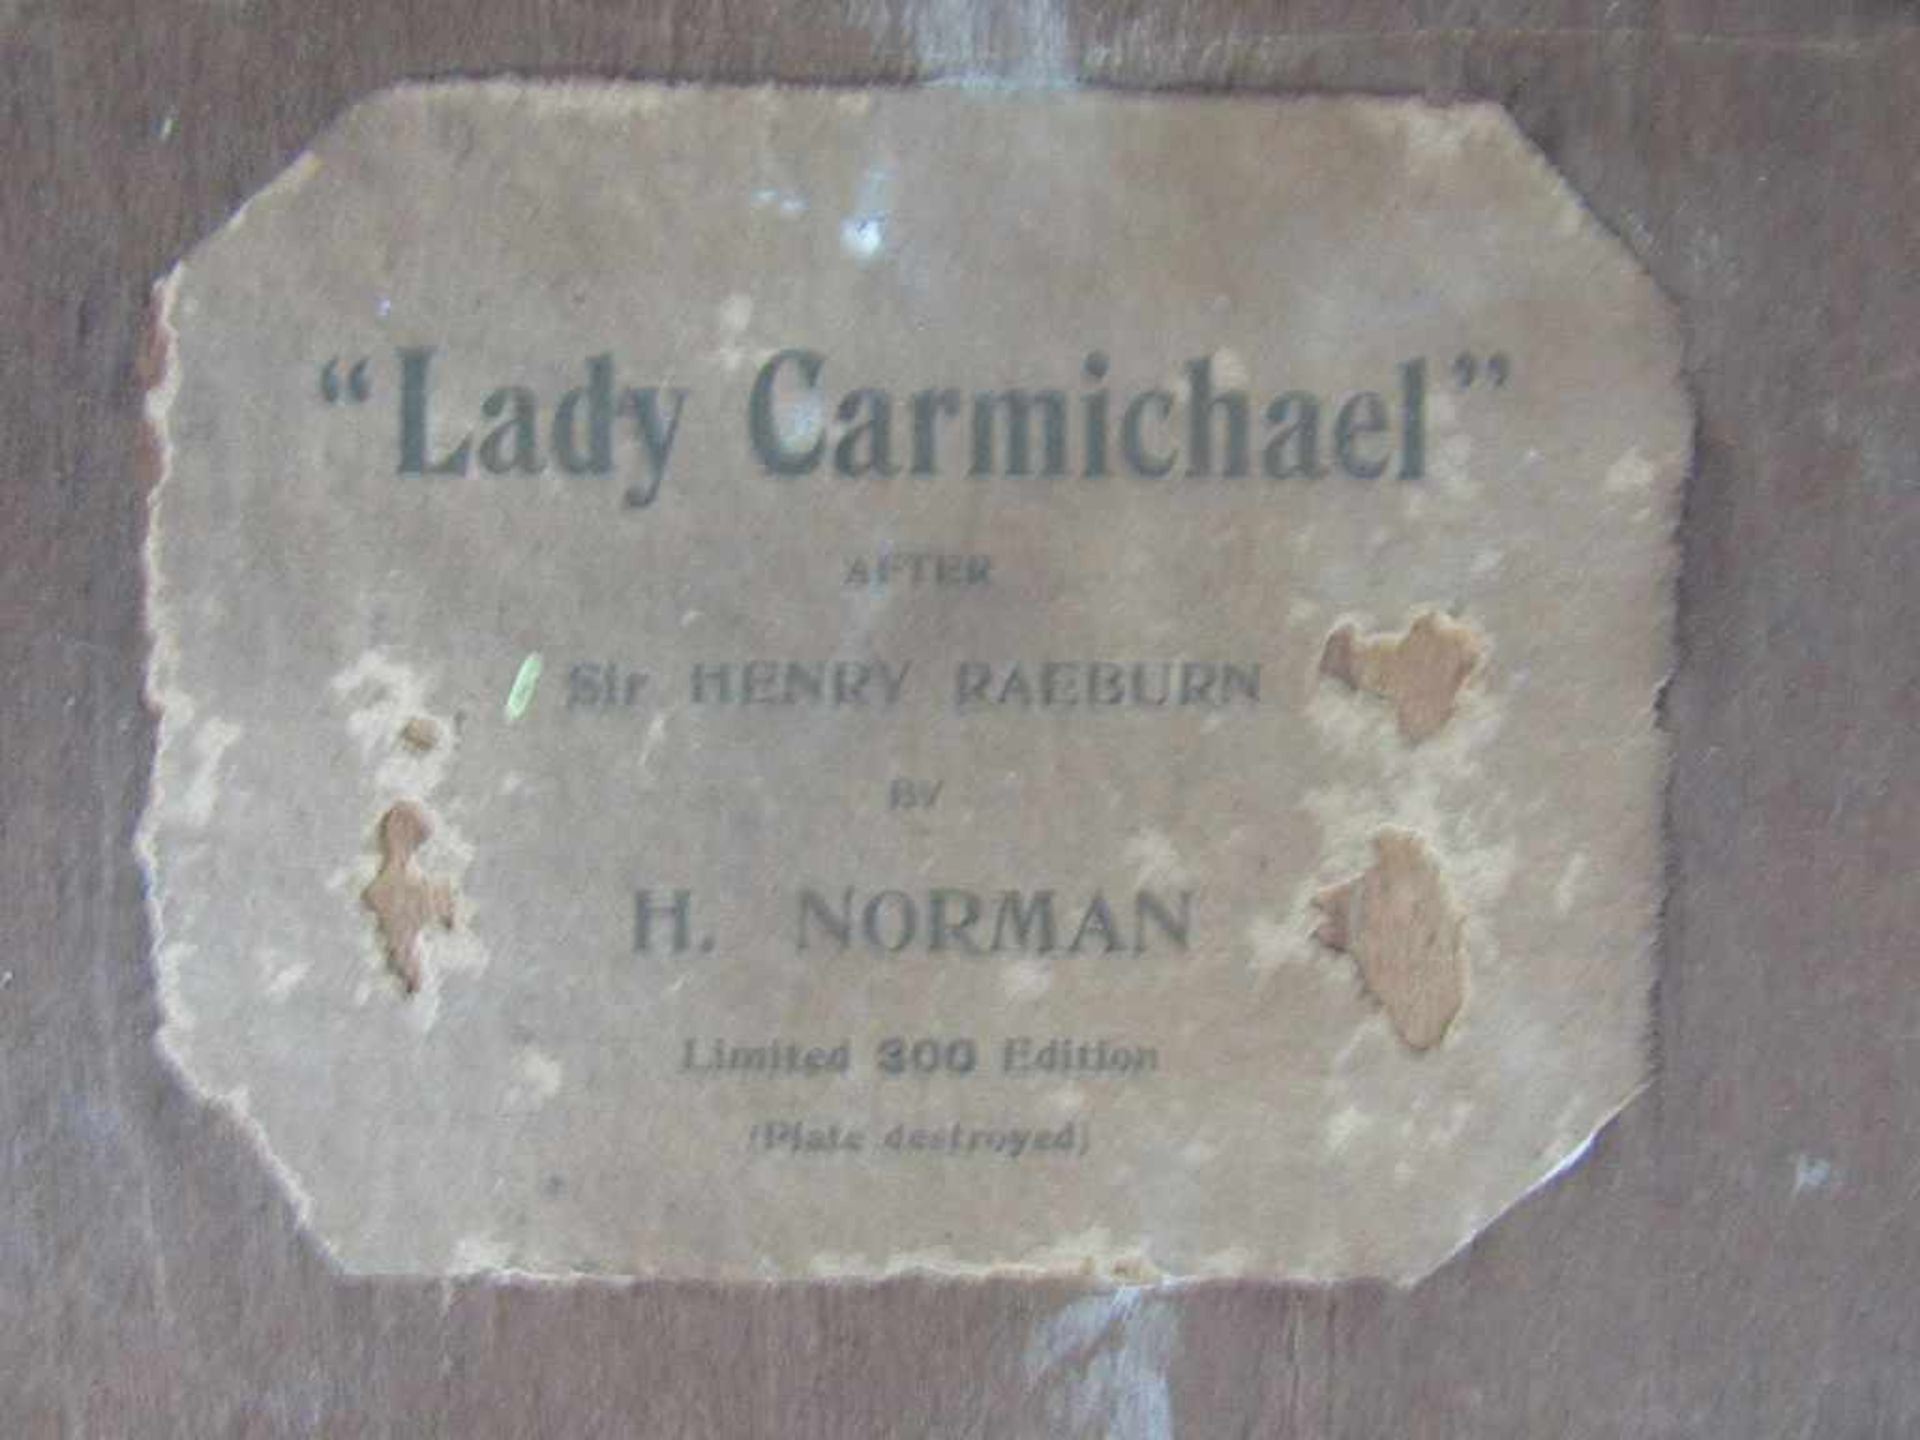 Gerahmtes Bild rückseitig betitelt Lady Carmichael und diverses anderes 51x64cm - Image 5 of 6